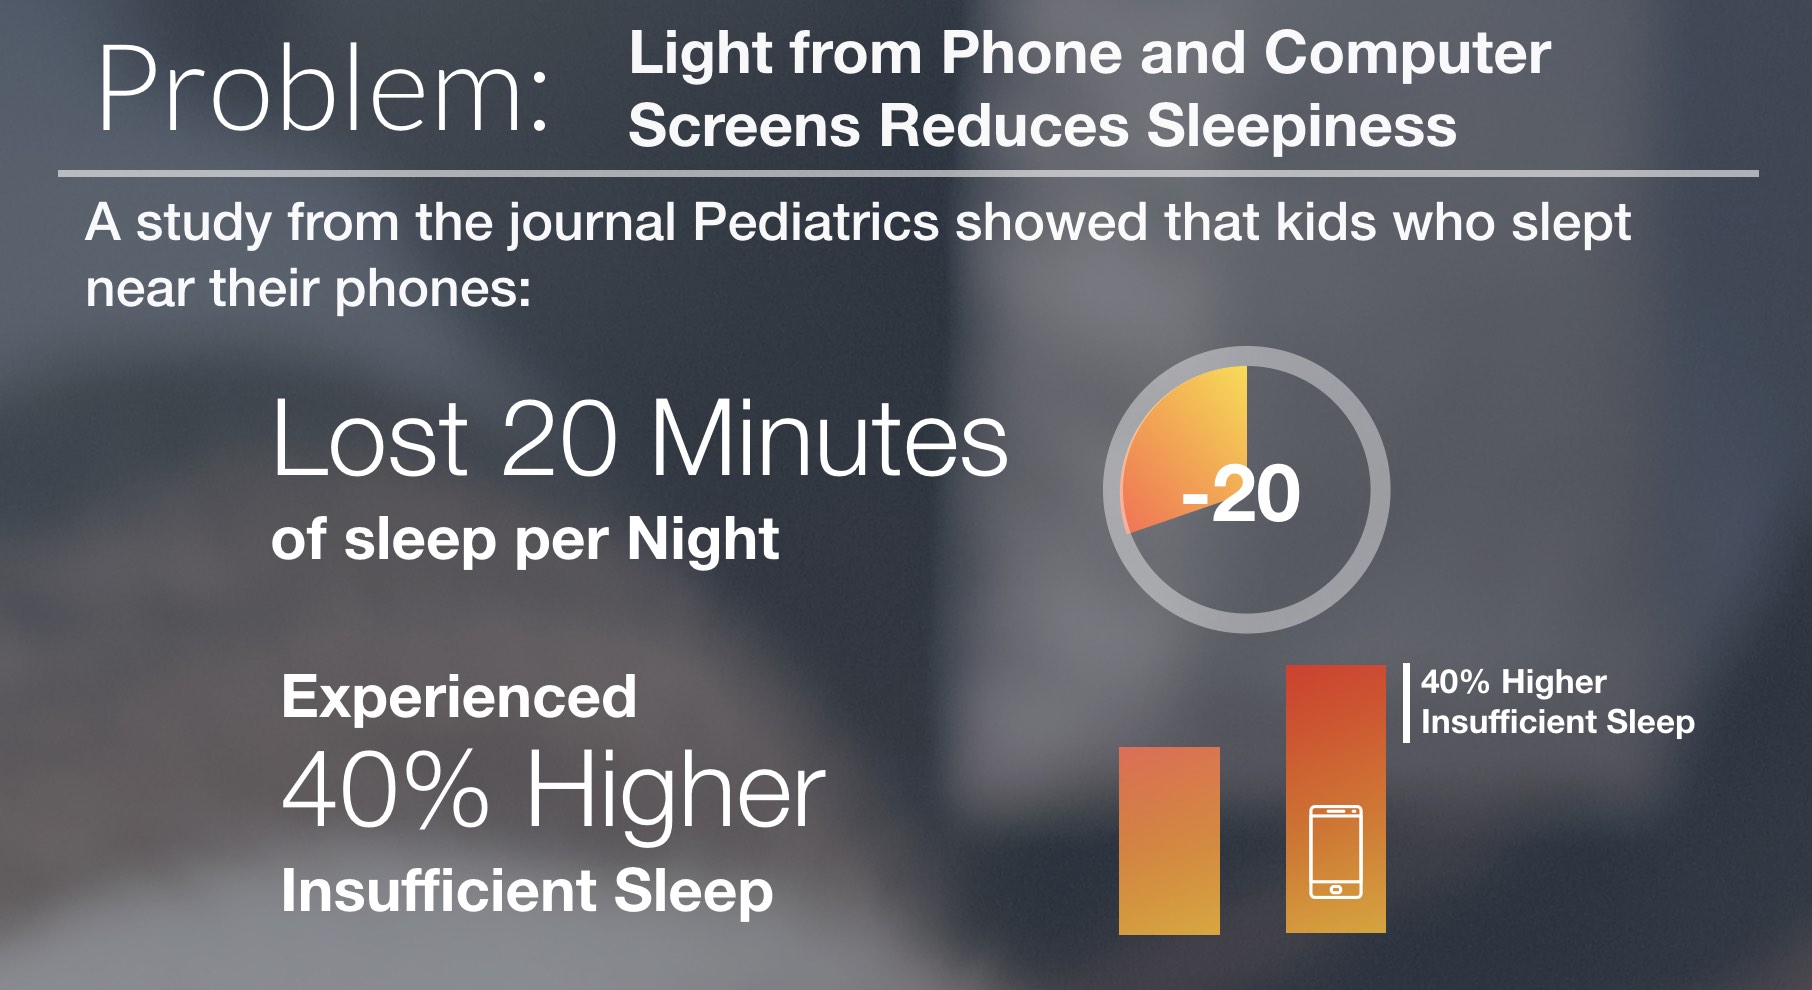 data on loss of sleep in kids who sleep with phones and TVs